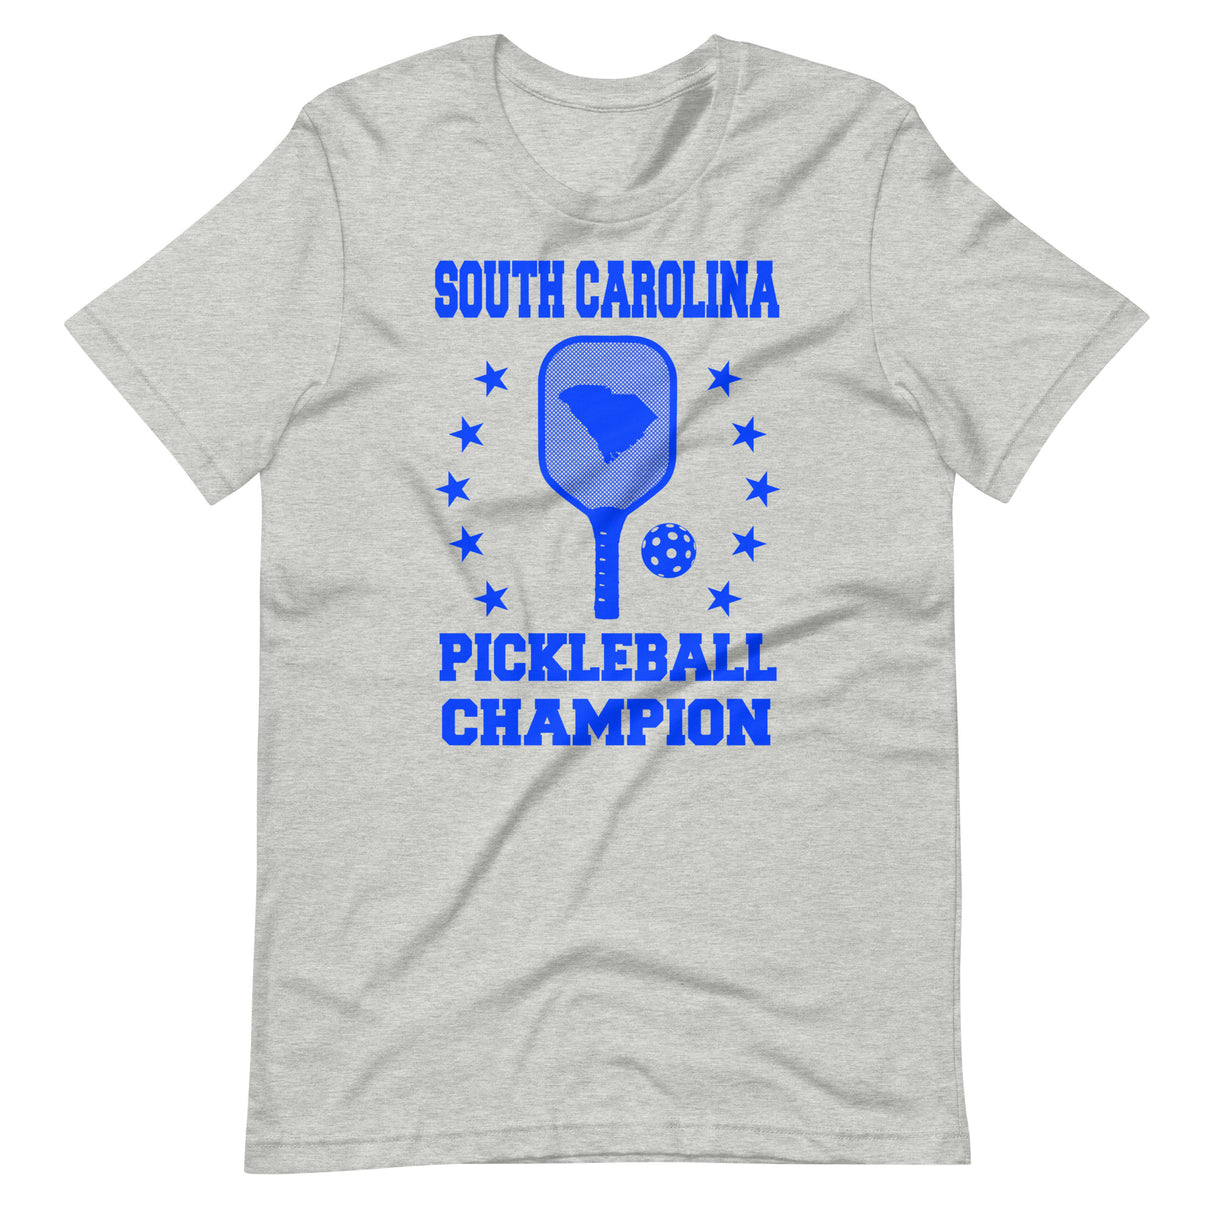 South Carolina Pickleball Champion Shirt